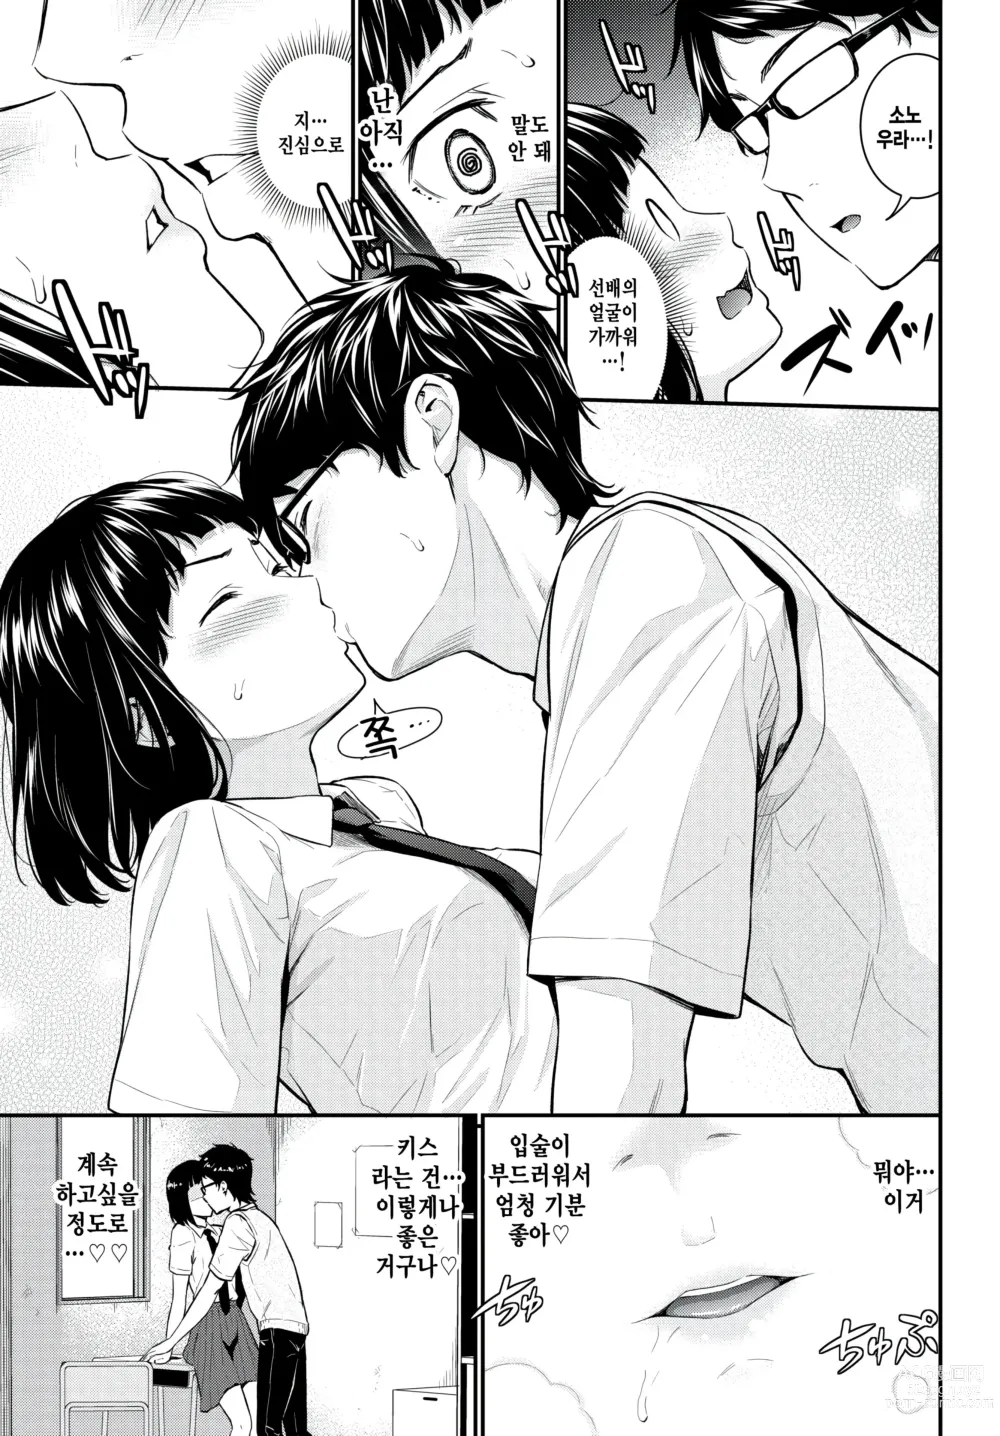 Page 5 of manga Kakushigoto